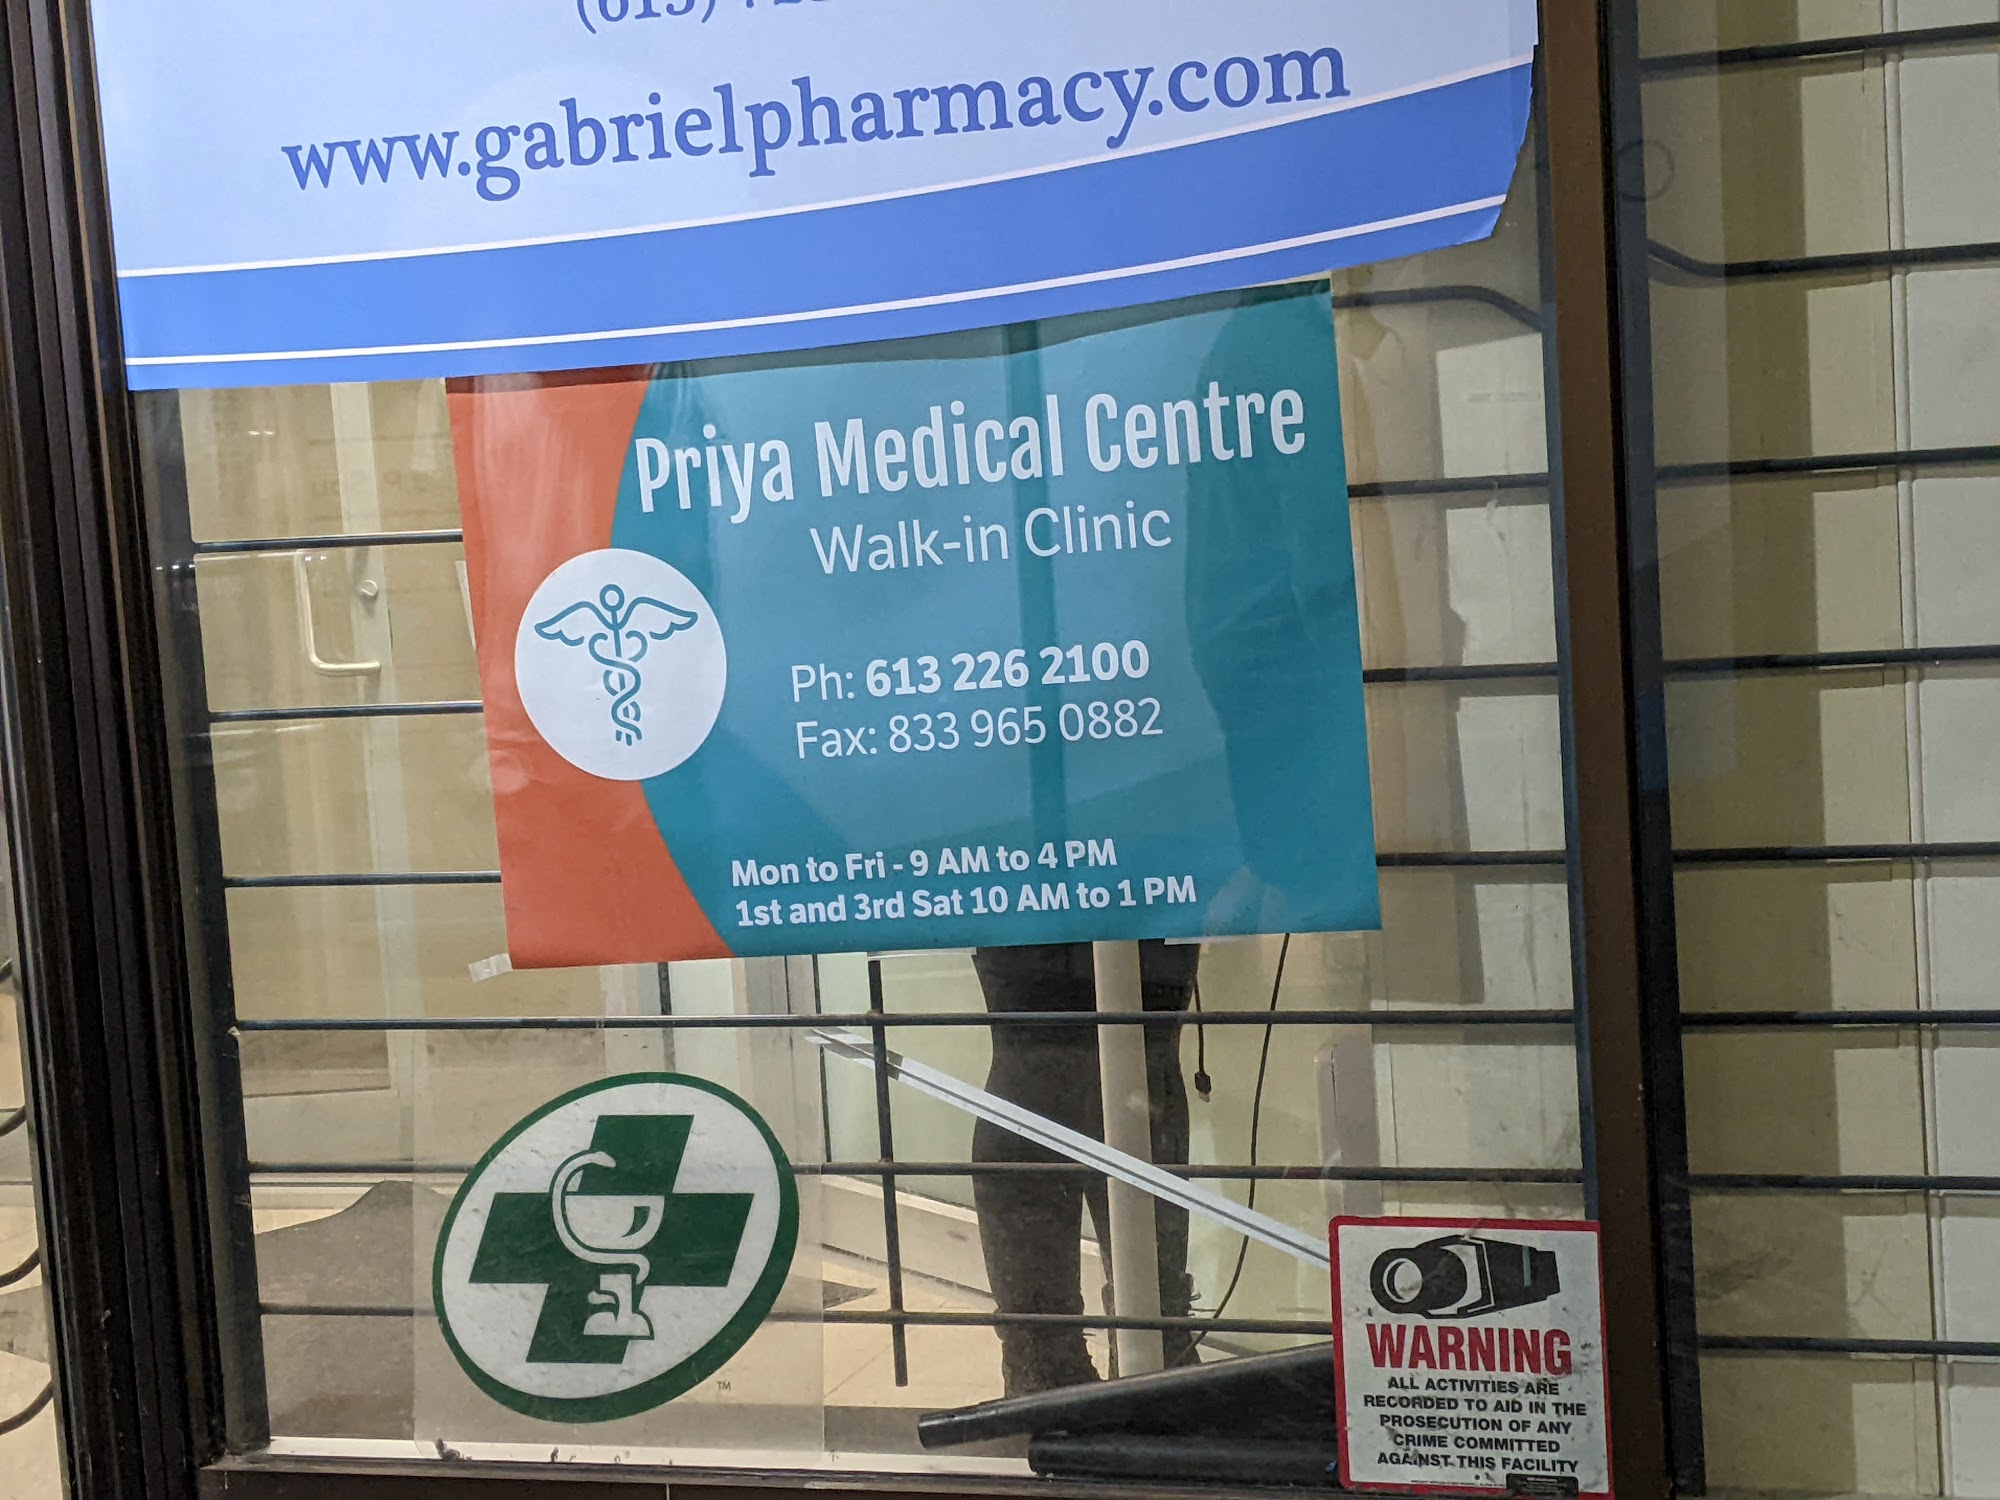 Priya Medical Centre